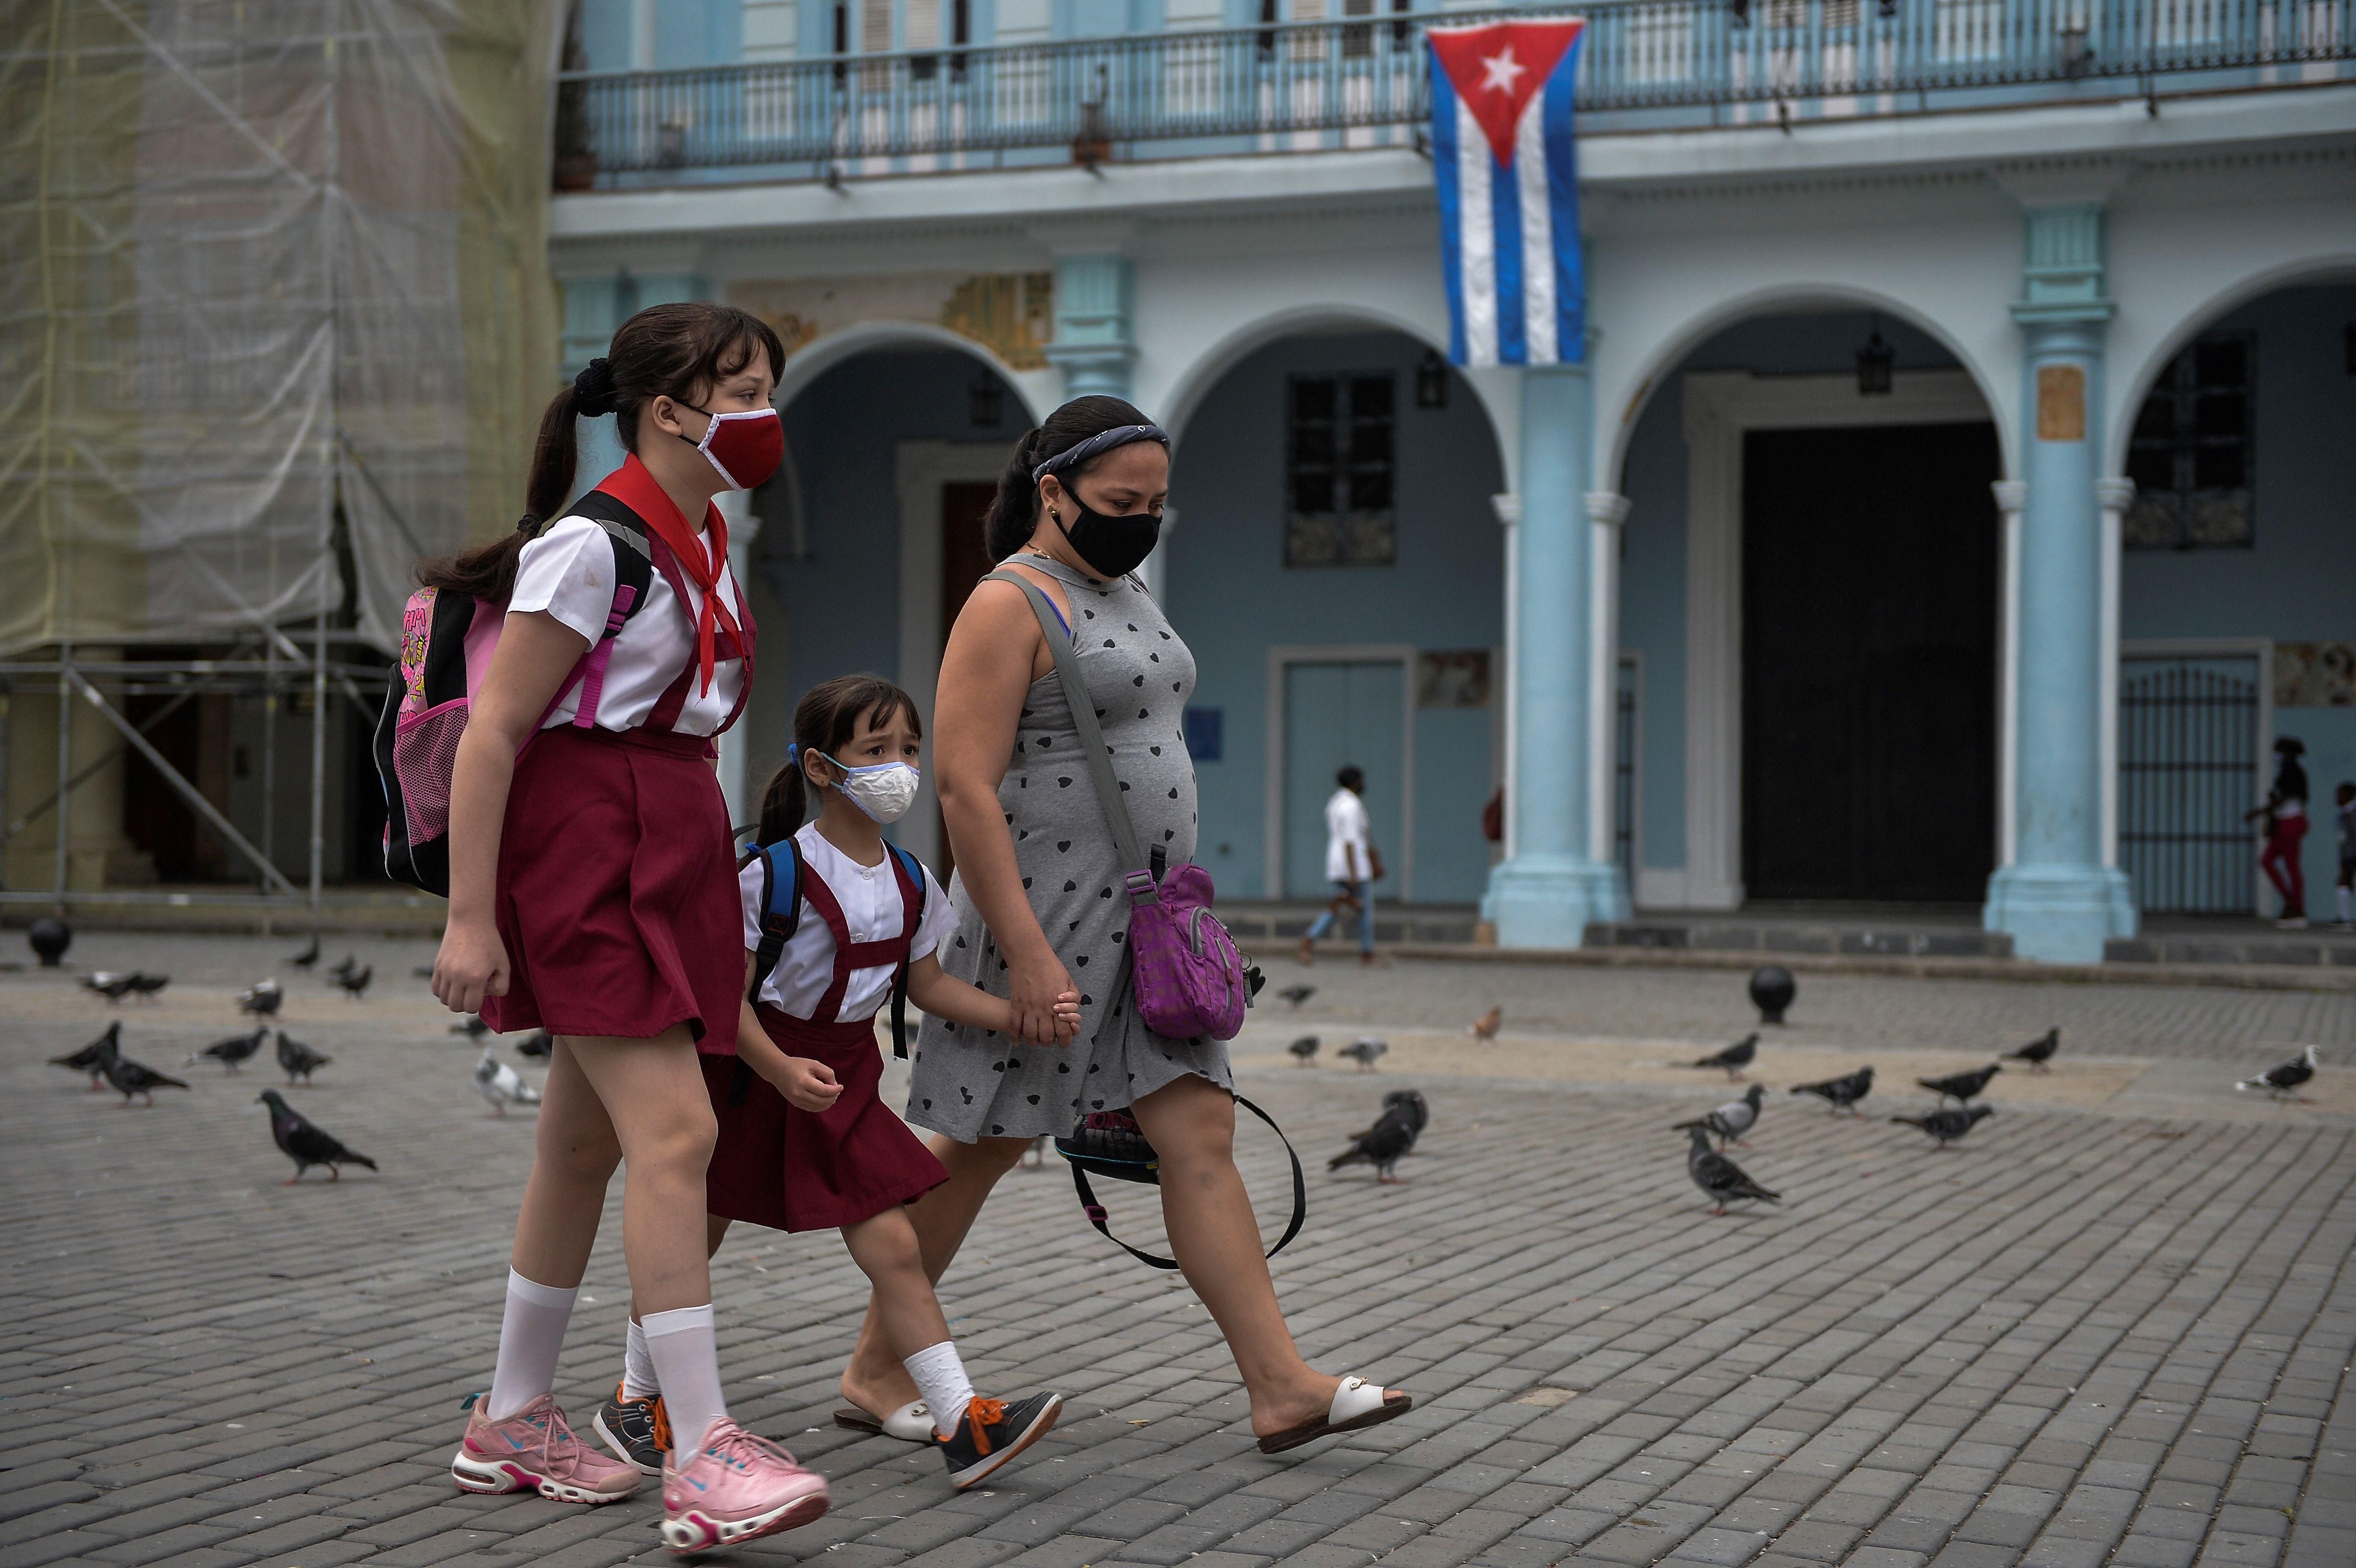 Children walk to school in Havana, Cuba on January 13, 2021. (Photo: YAMIL LAGE/AFP via Getty Images)